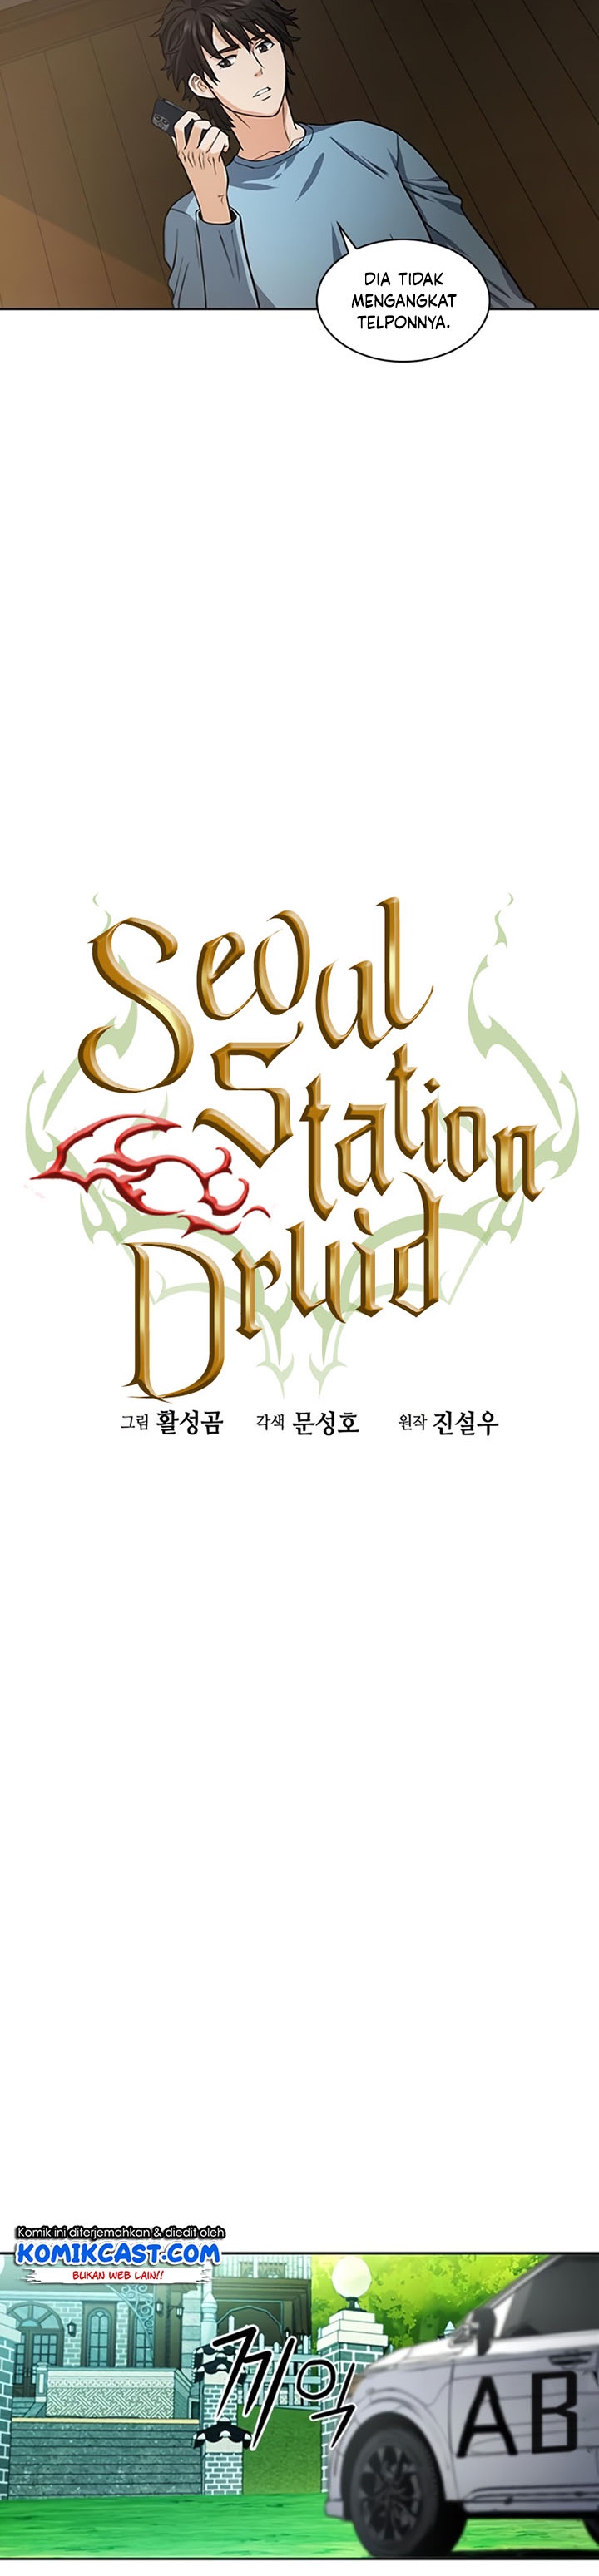 Seoul Station Druid Chapter 42